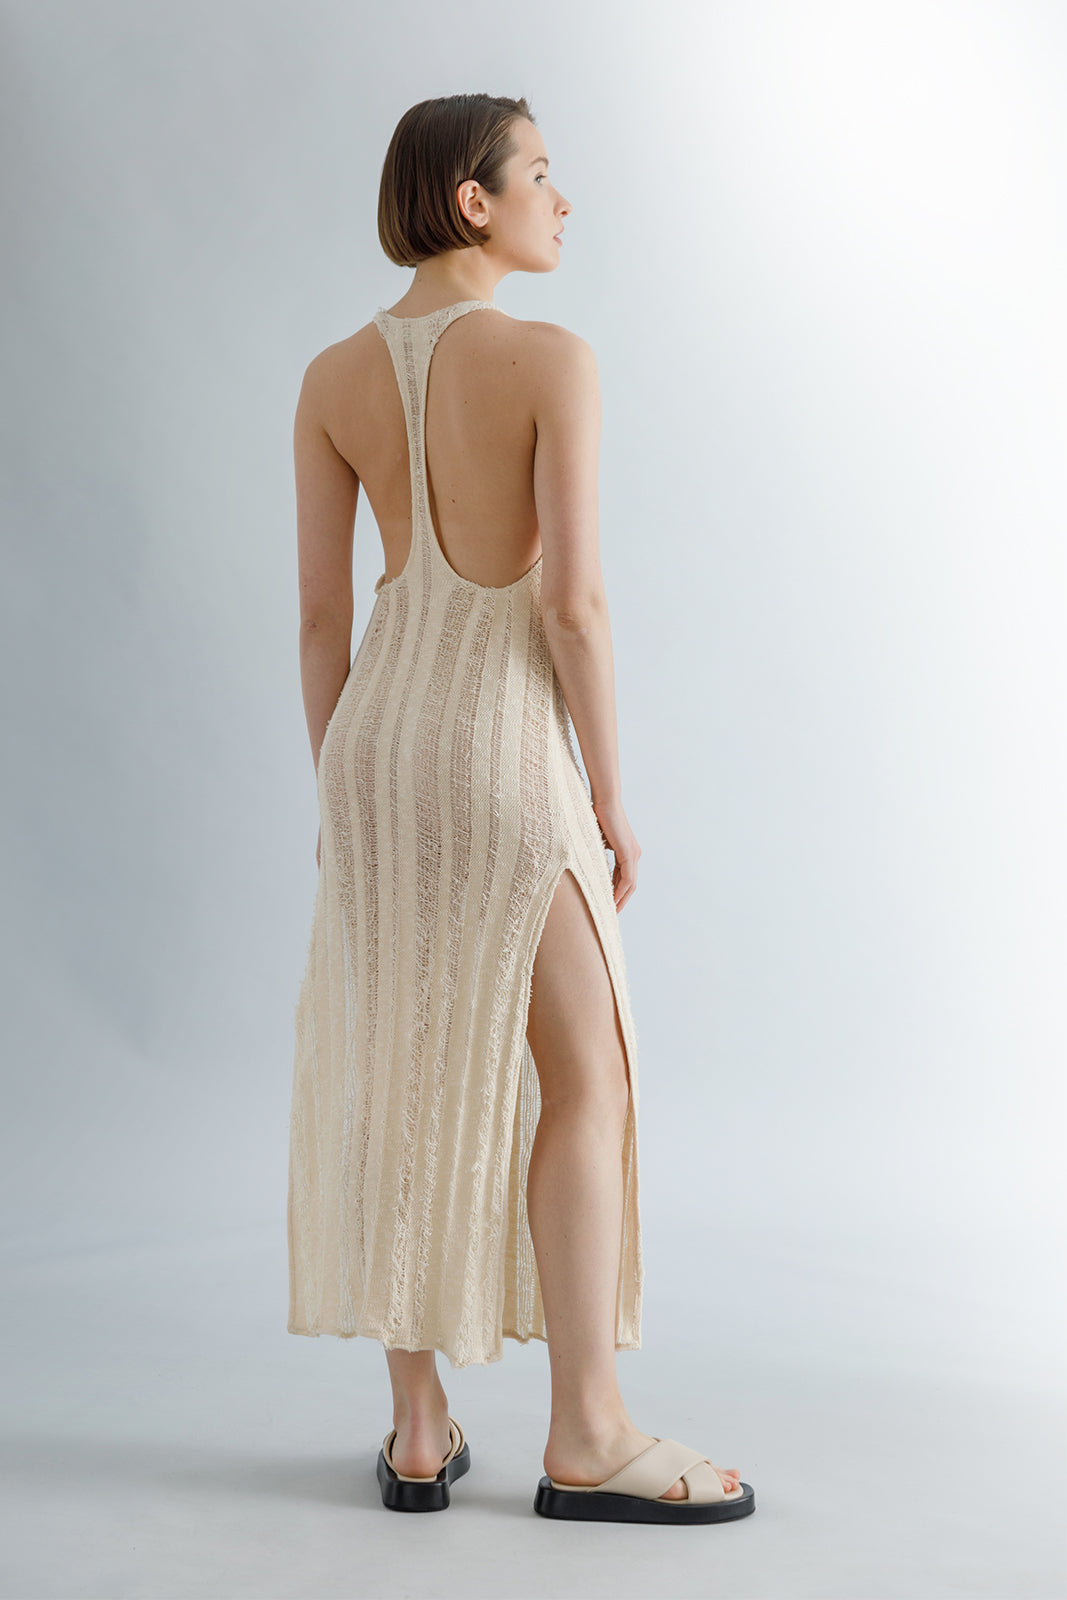 Straight Sand Beige Dress